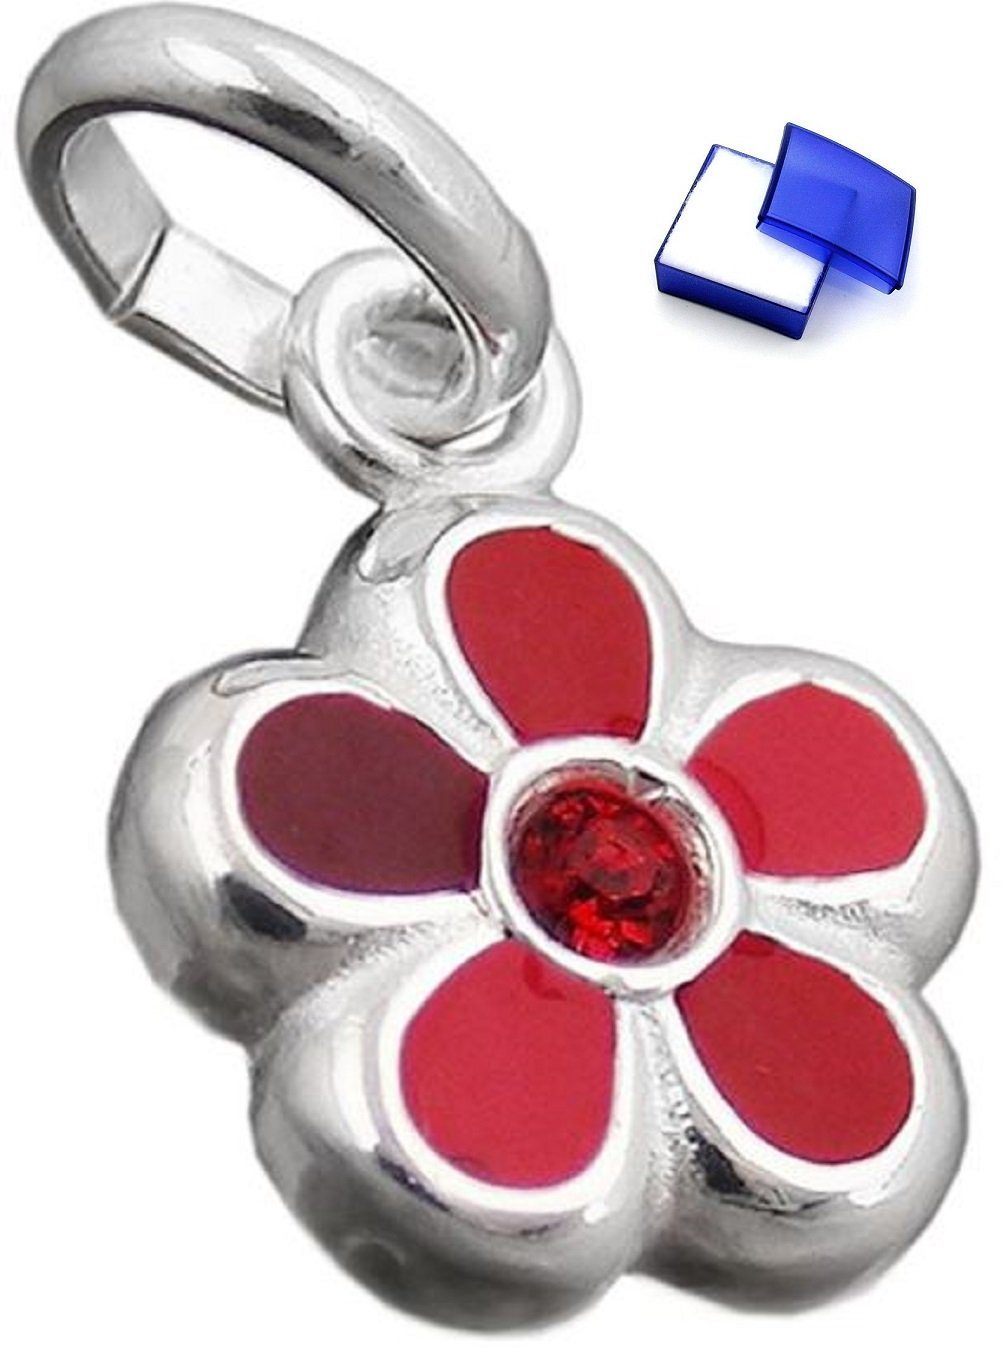 unbespielt Kettenanhänger Kettenanhänger Anhänger Blume rot lackiert 925 Silber 8 mm inklusive Schmuckbox, Silberschmuck für Kinder